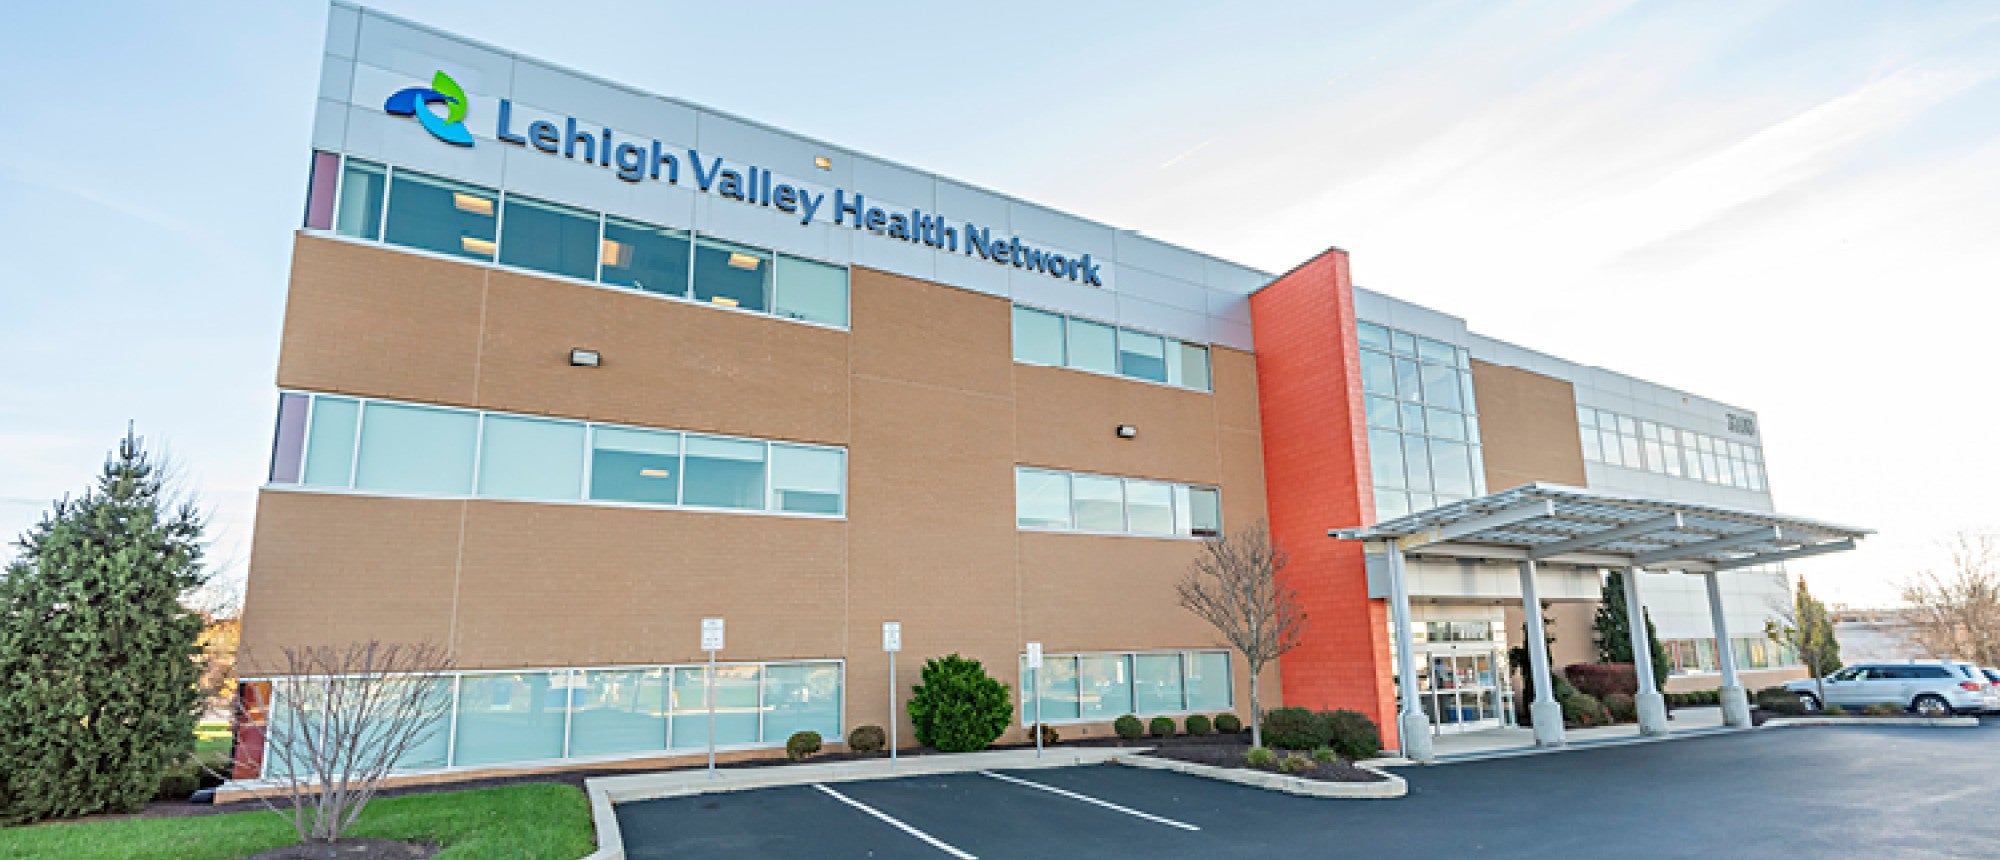 Lehigh Valley Health Network – 2030 Highland Ave.